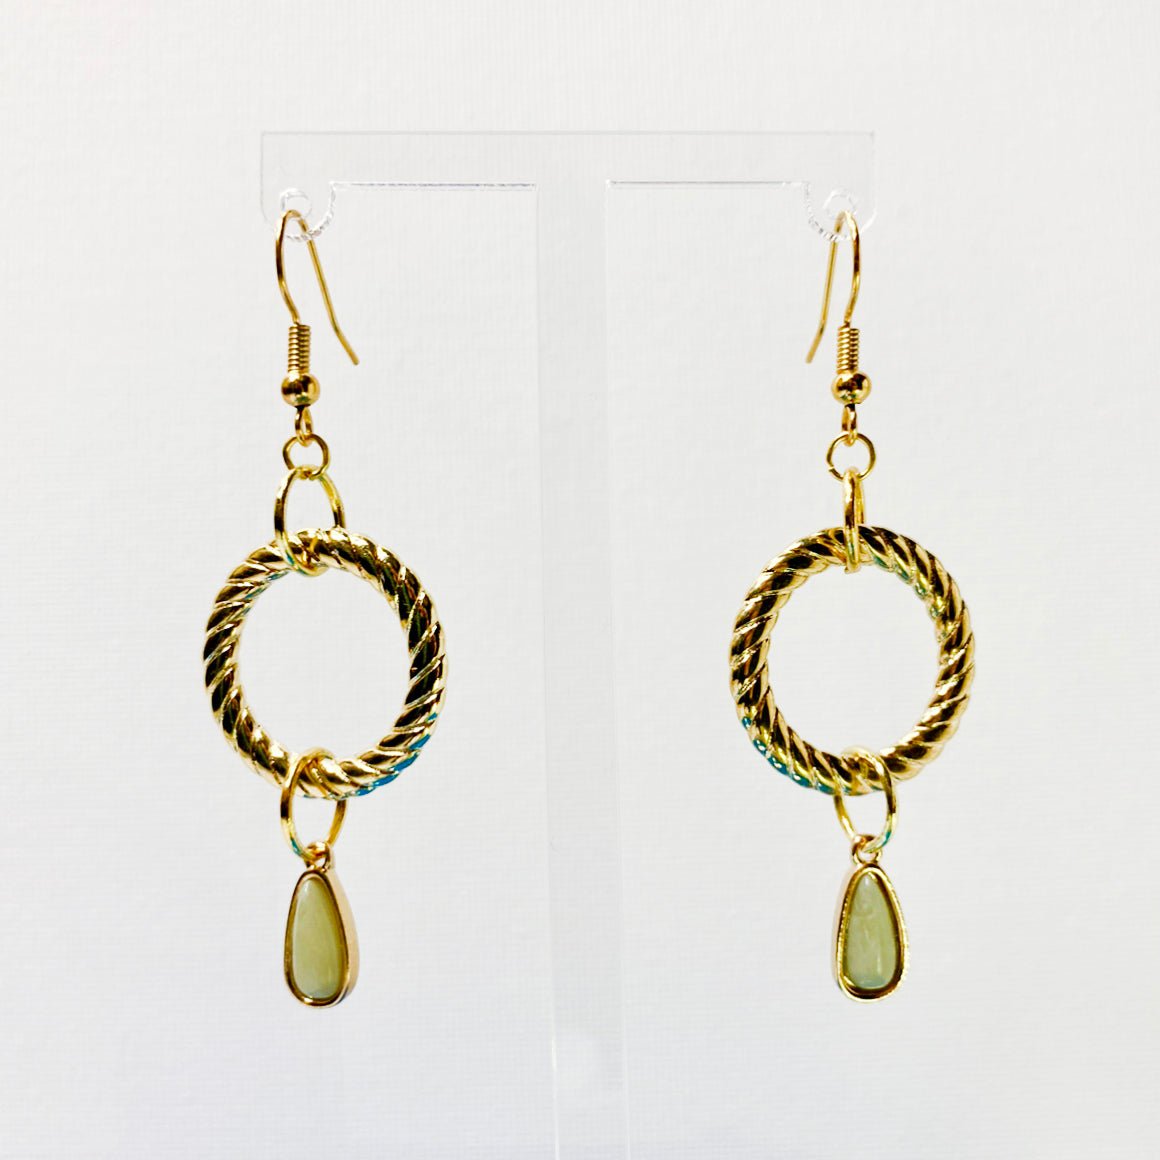 Hanging earrings with gold-plated hoop and tan teardrop gemstone.  